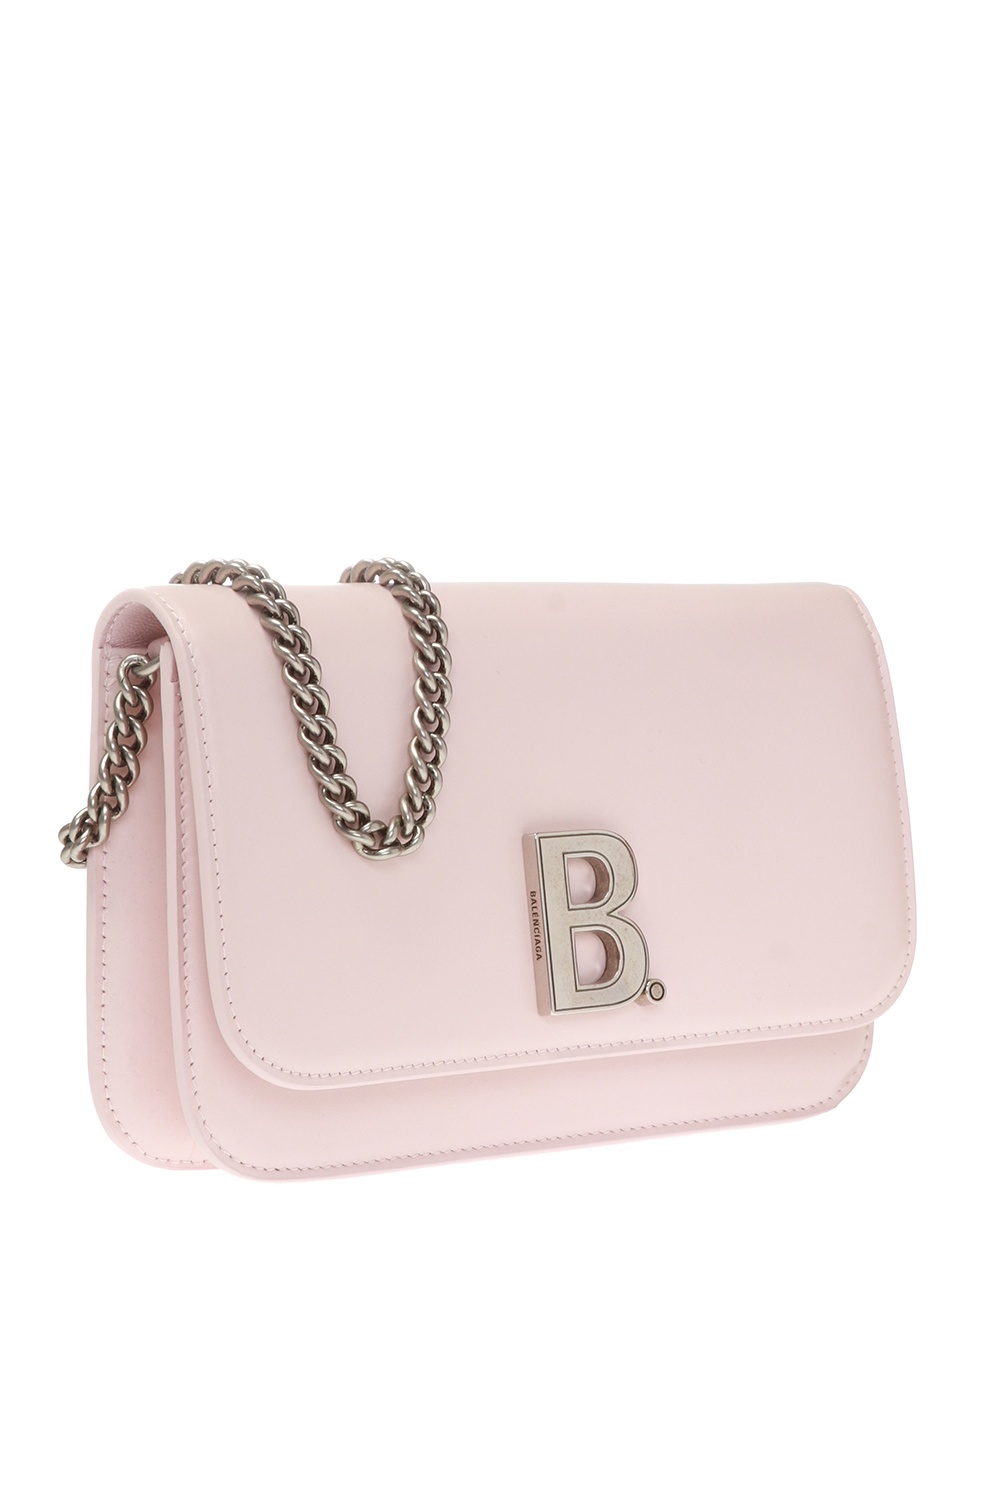 balenciaga wallet on chain pink